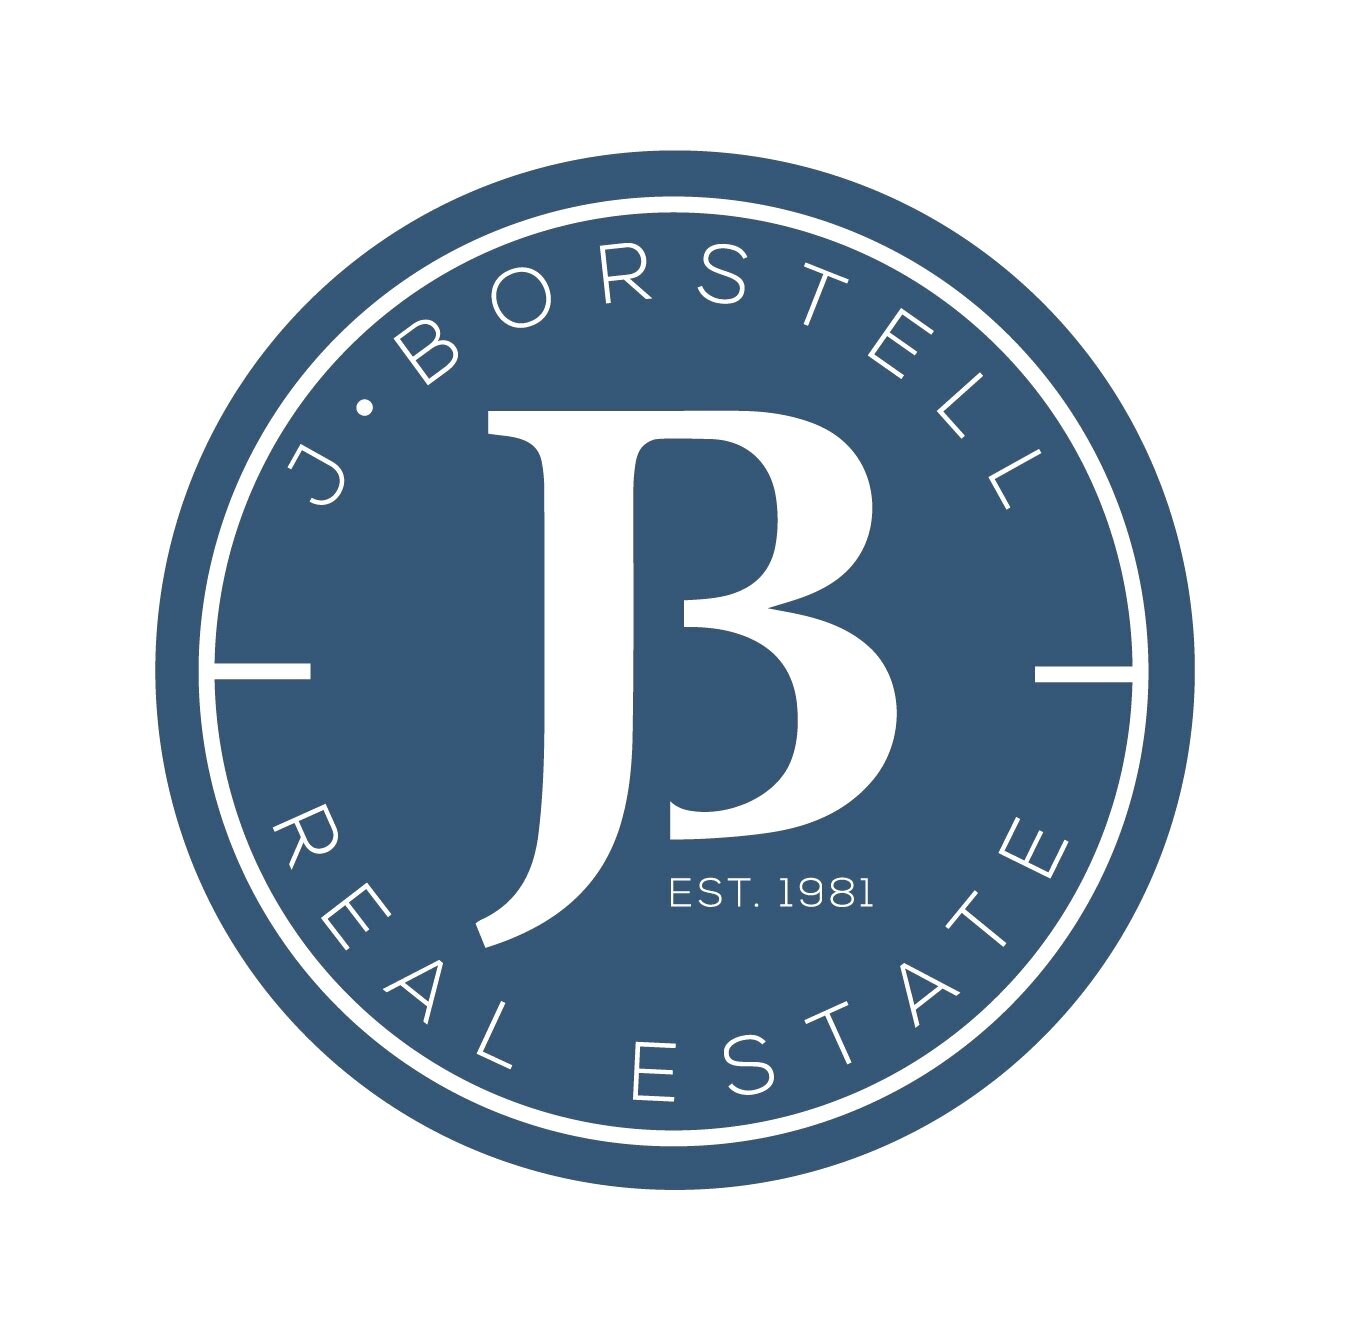 J.Borstell Real Estate